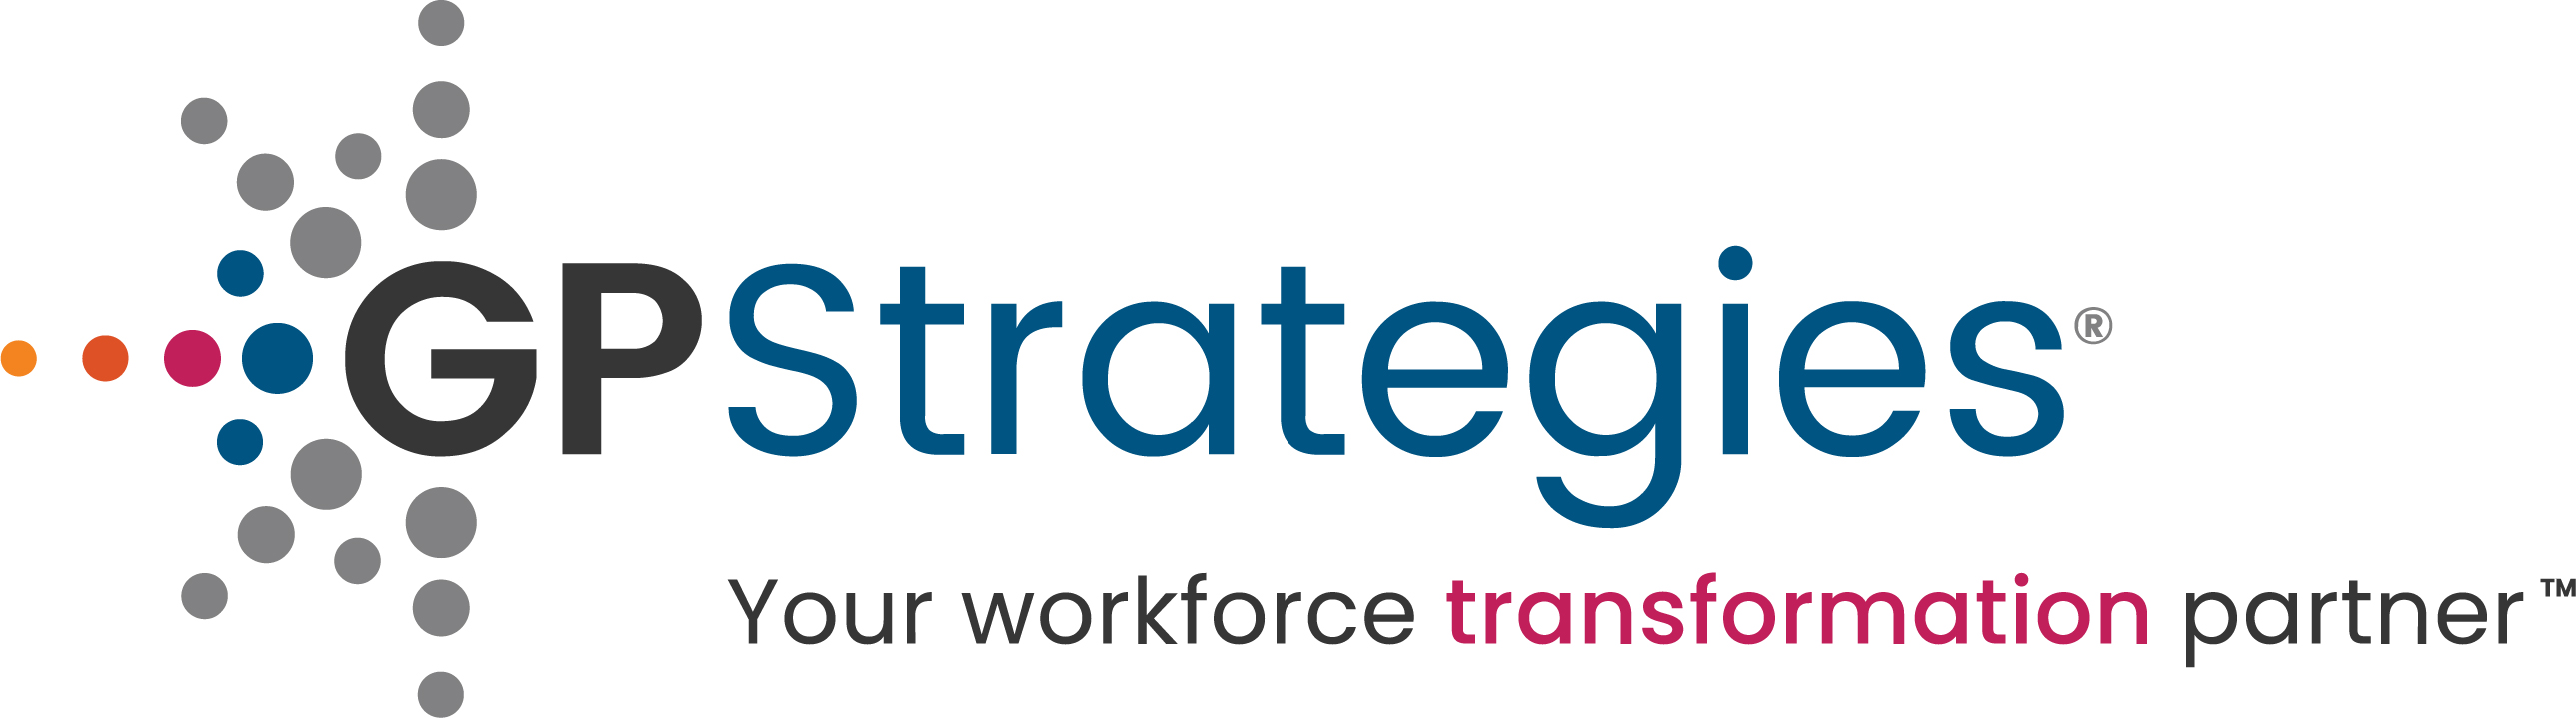 GP Strategies Logo Tagline 2020 RGB BerryTrans highRes